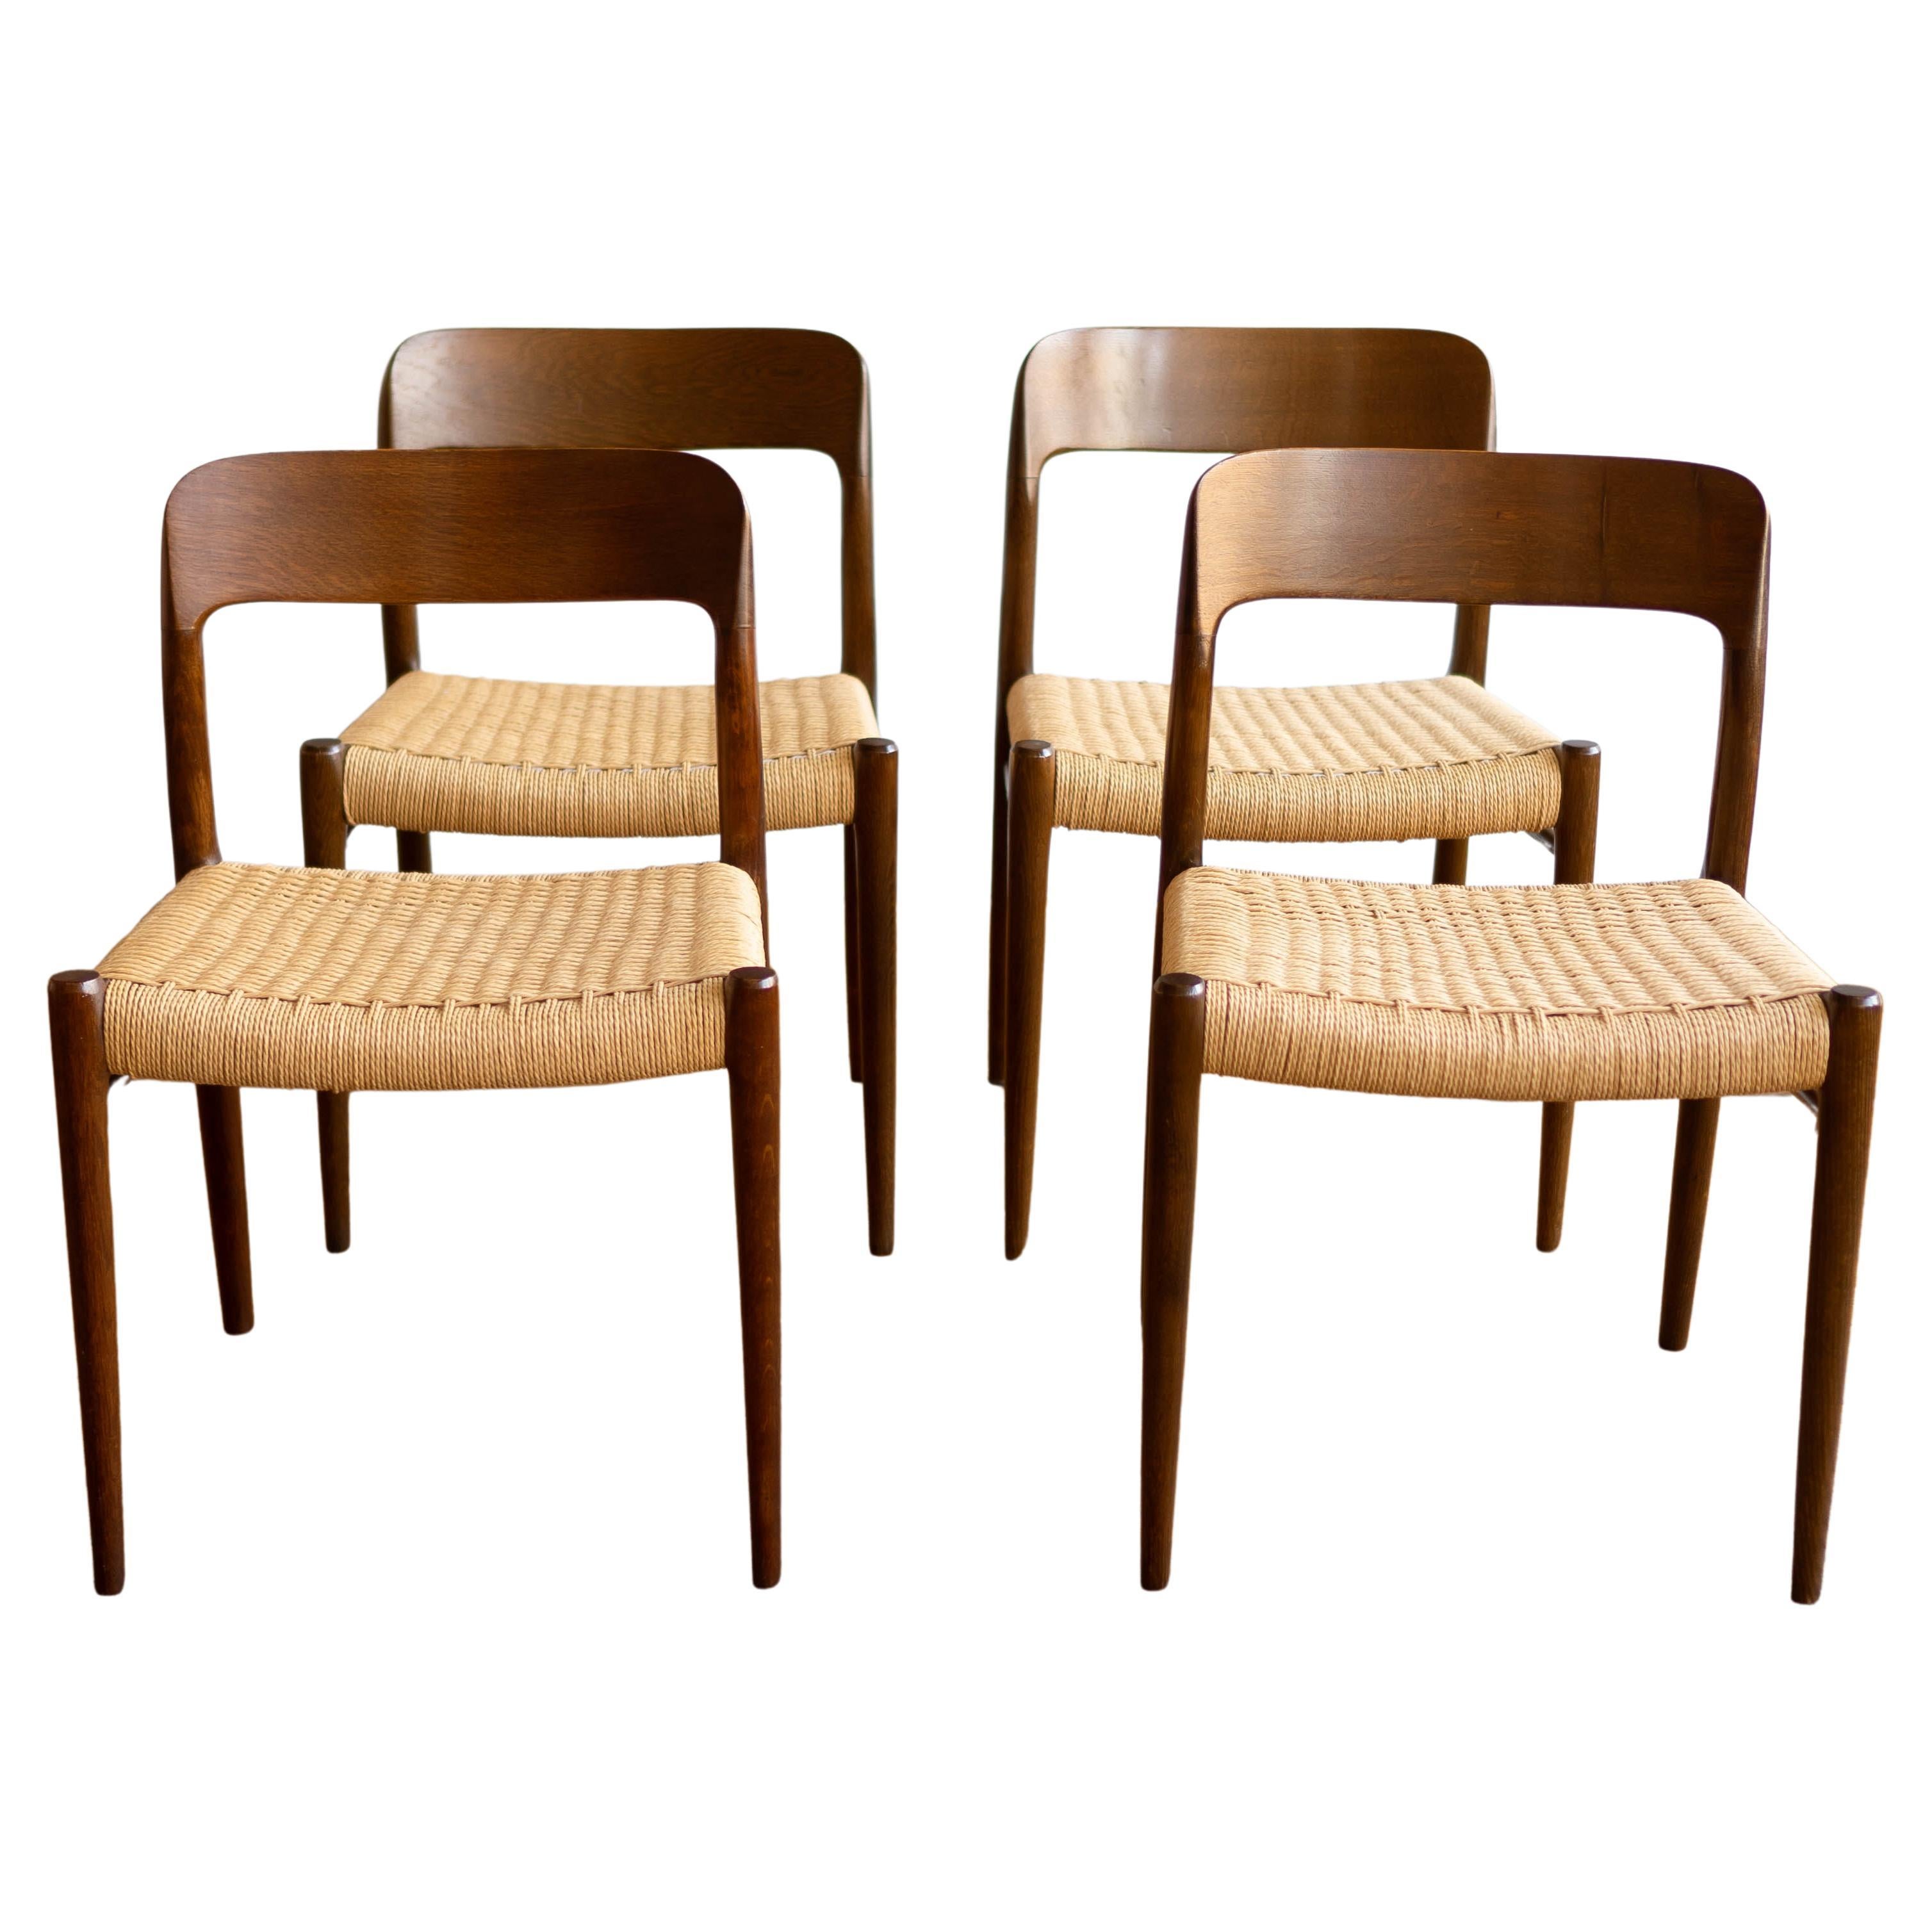 1960s Mid-Century Modern Danish Moller 75 Chairs in Wenge Wood - Set of 4